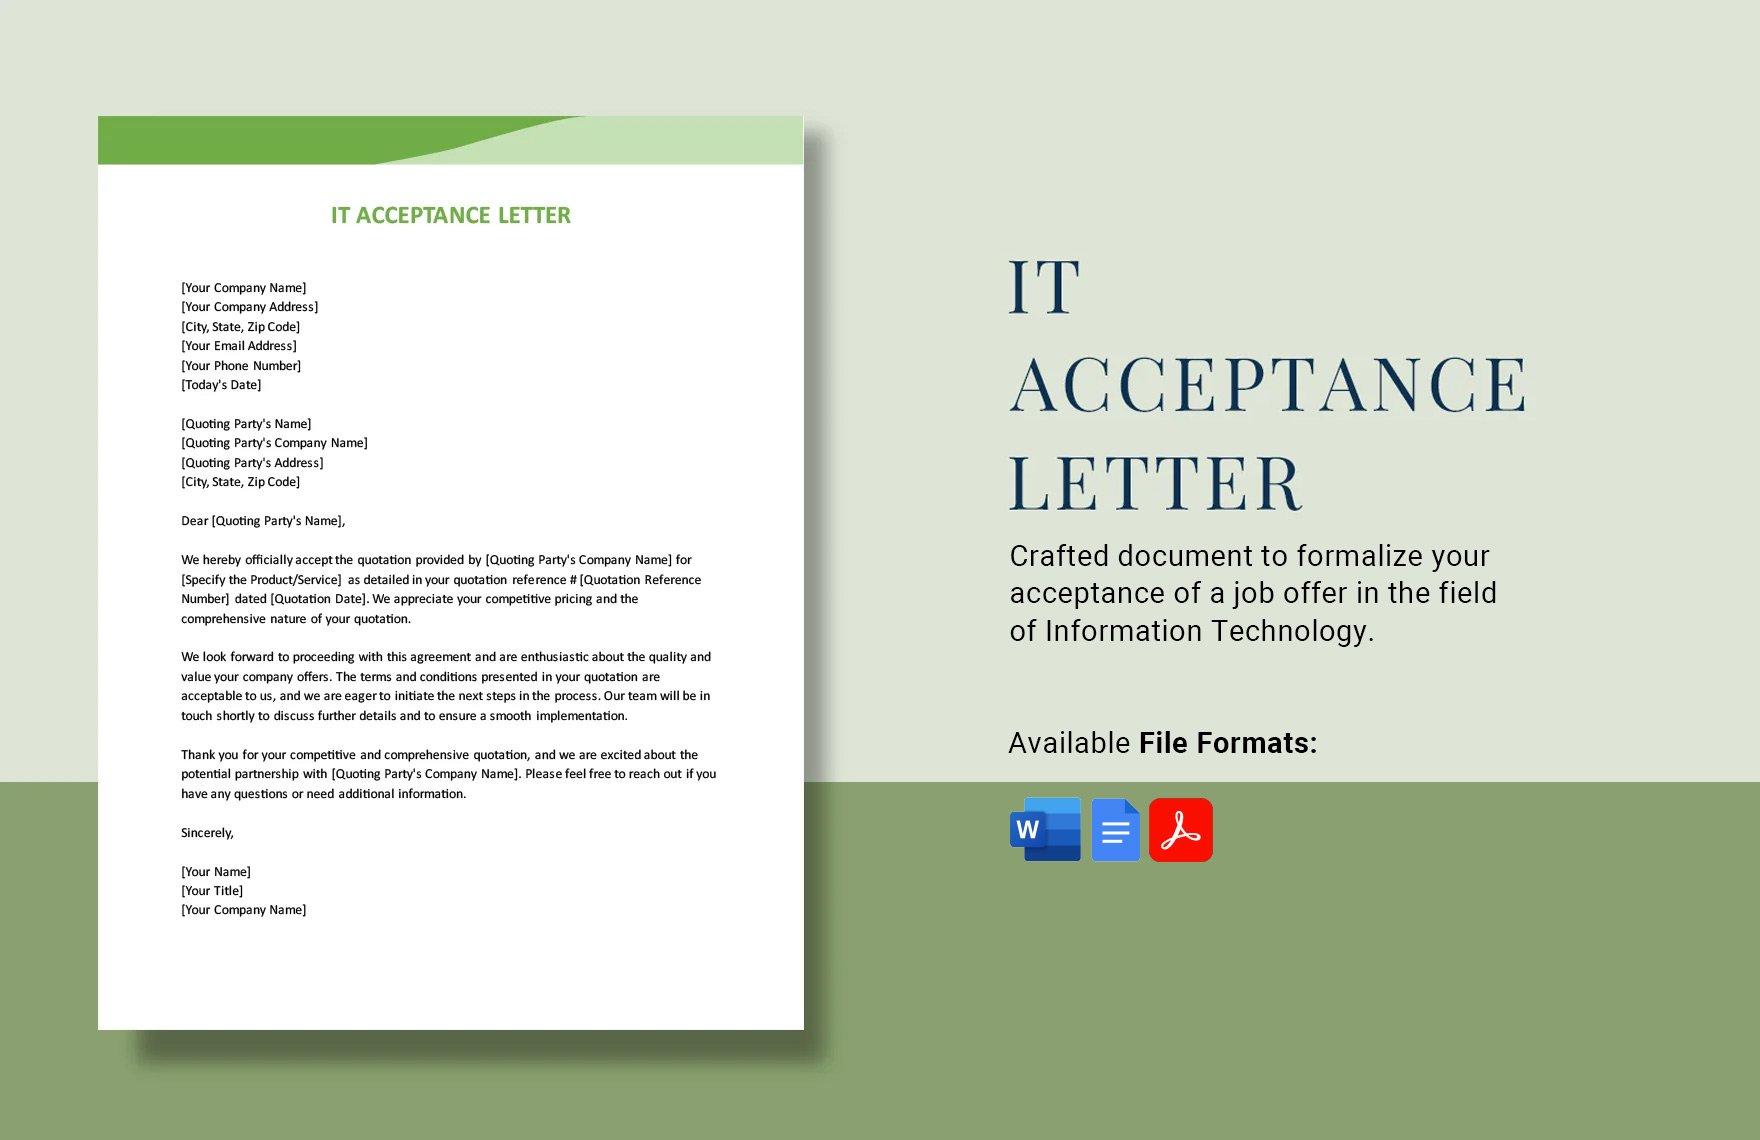 It Acceptance Letter in Word, Google Docs, PDF